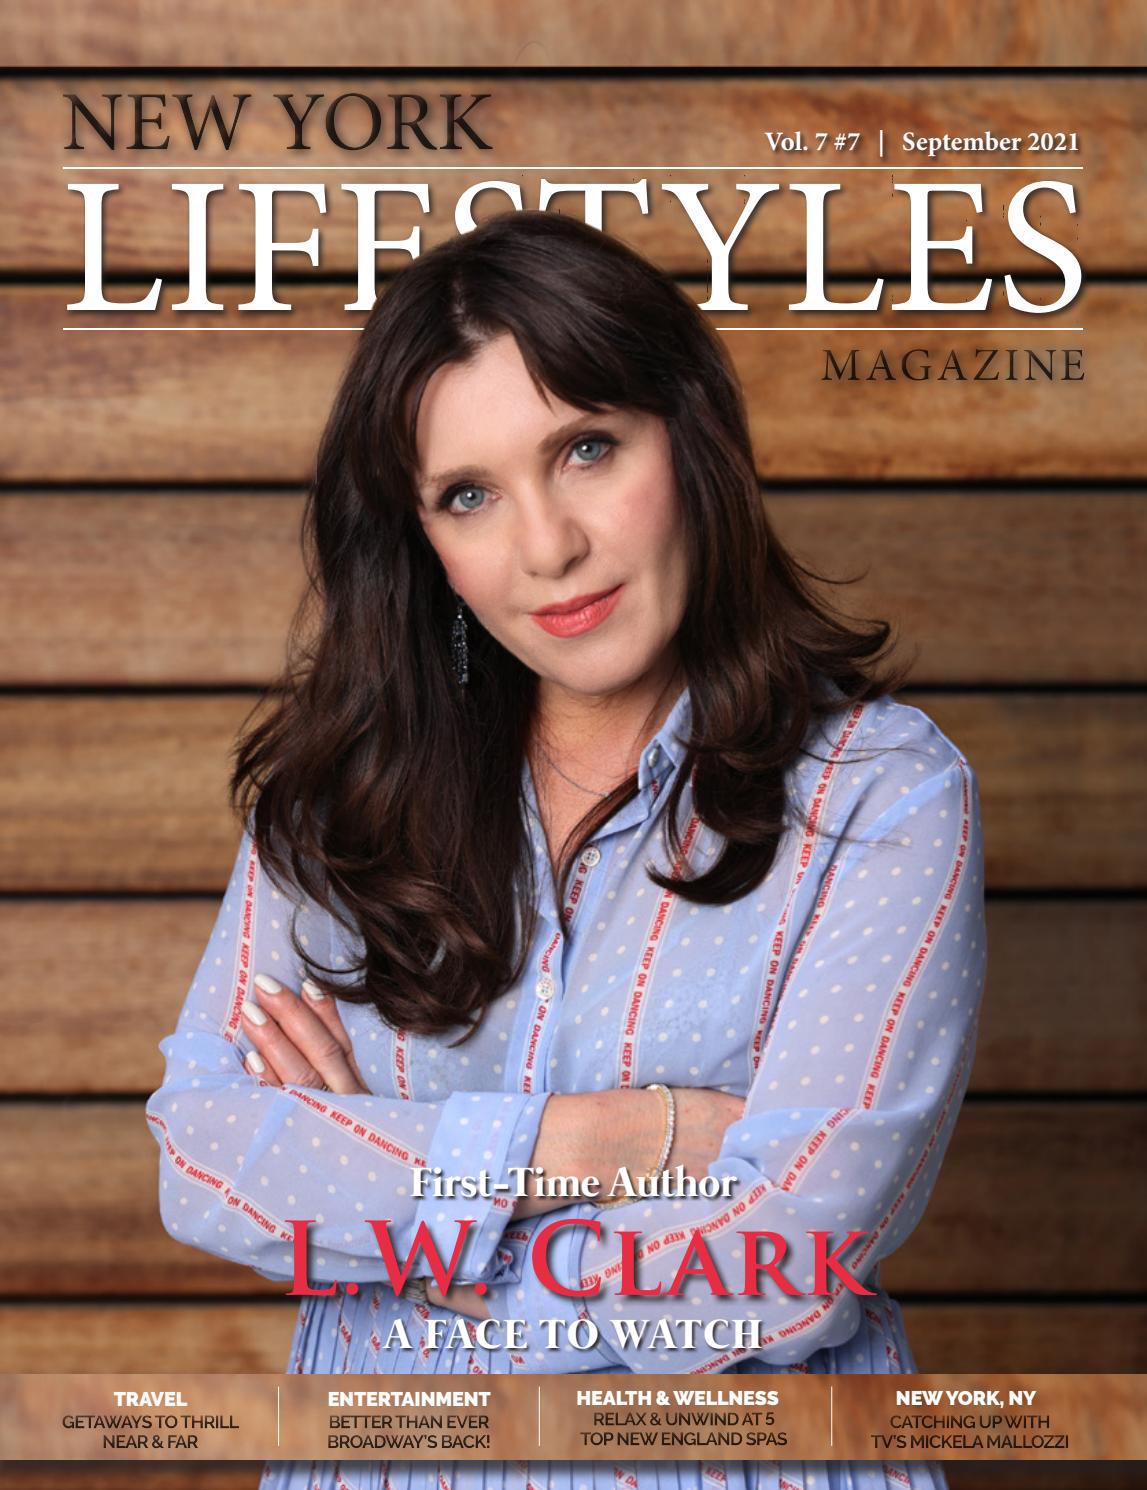 New York Lifestyles Magazine - September 2021